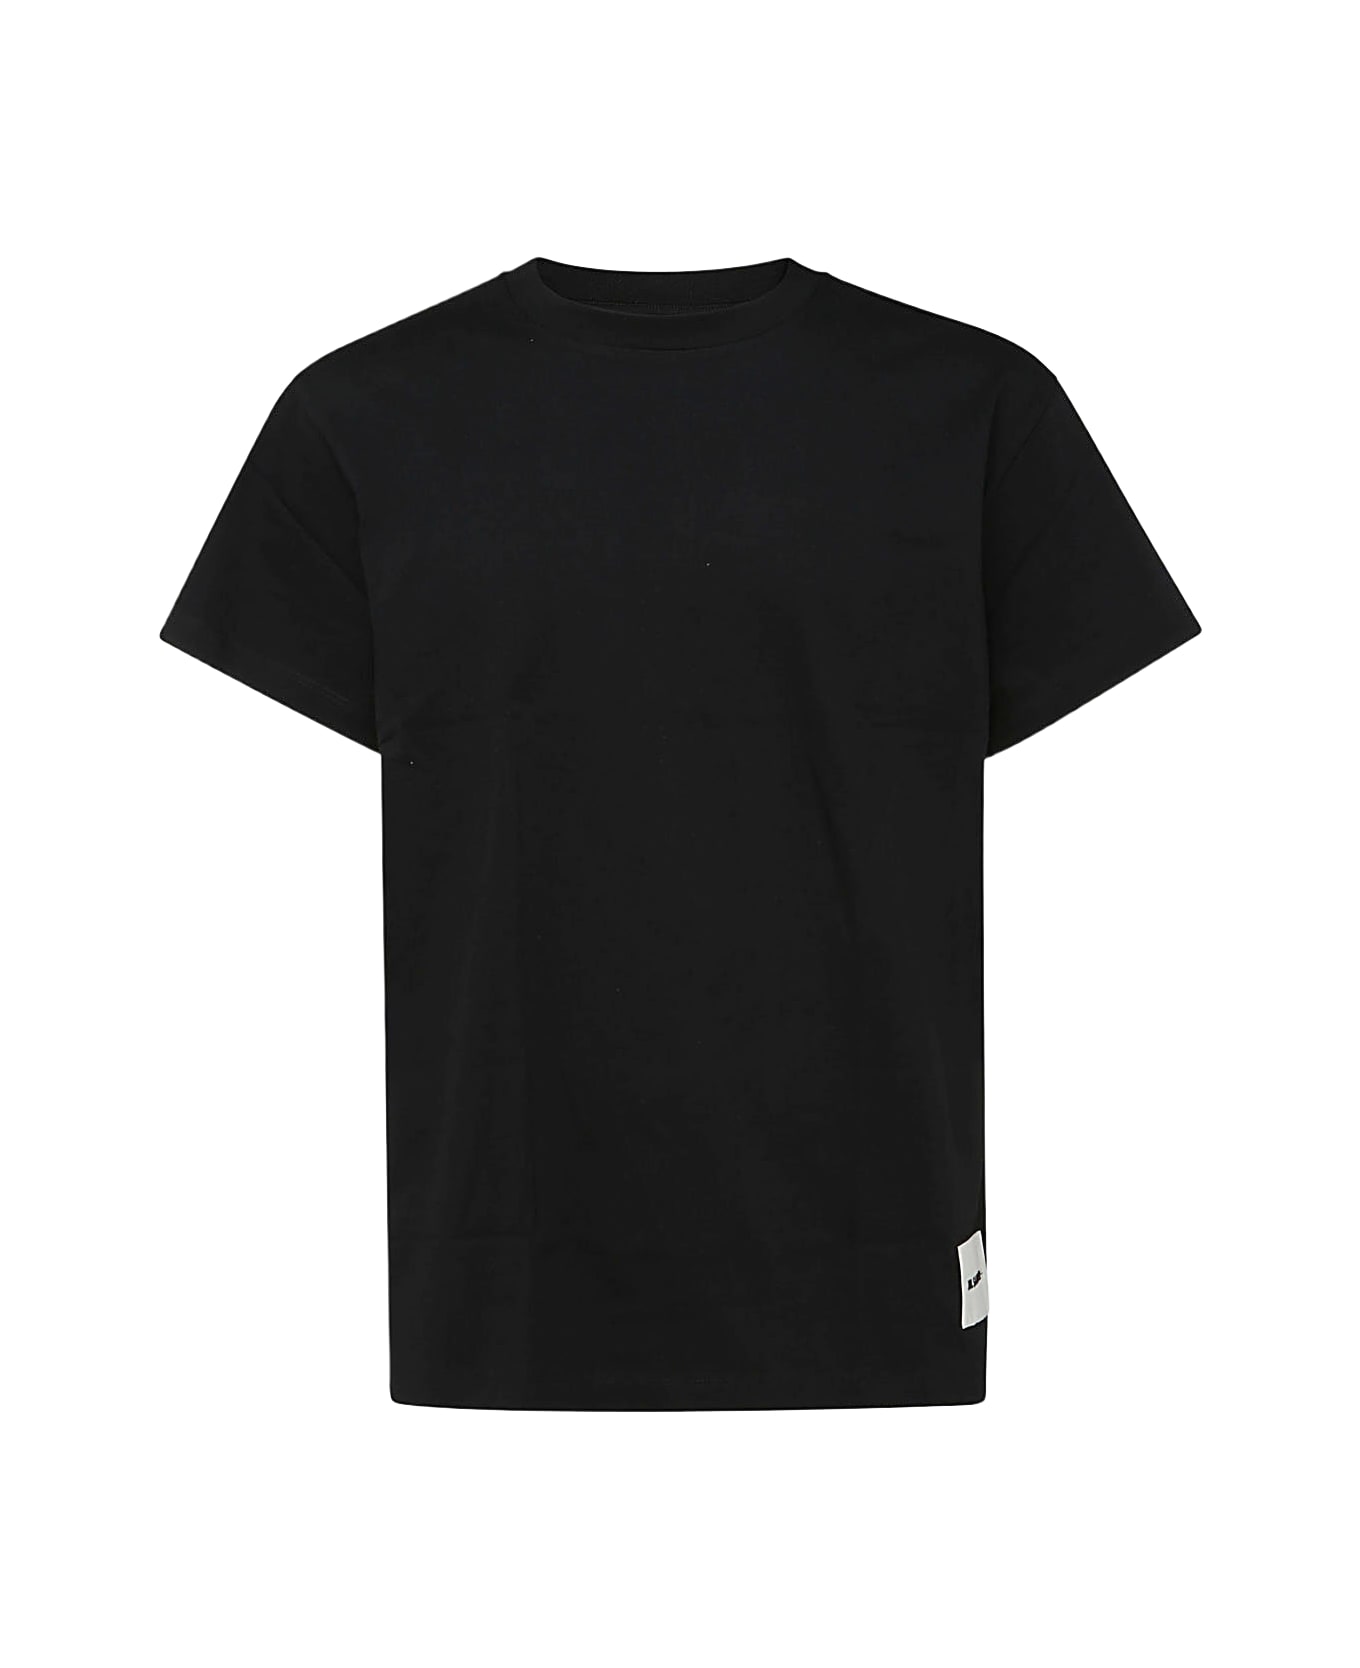 Jil Sander Black Cotton T-shirt 3-pack Set - BLACK/BLACK/BLACK